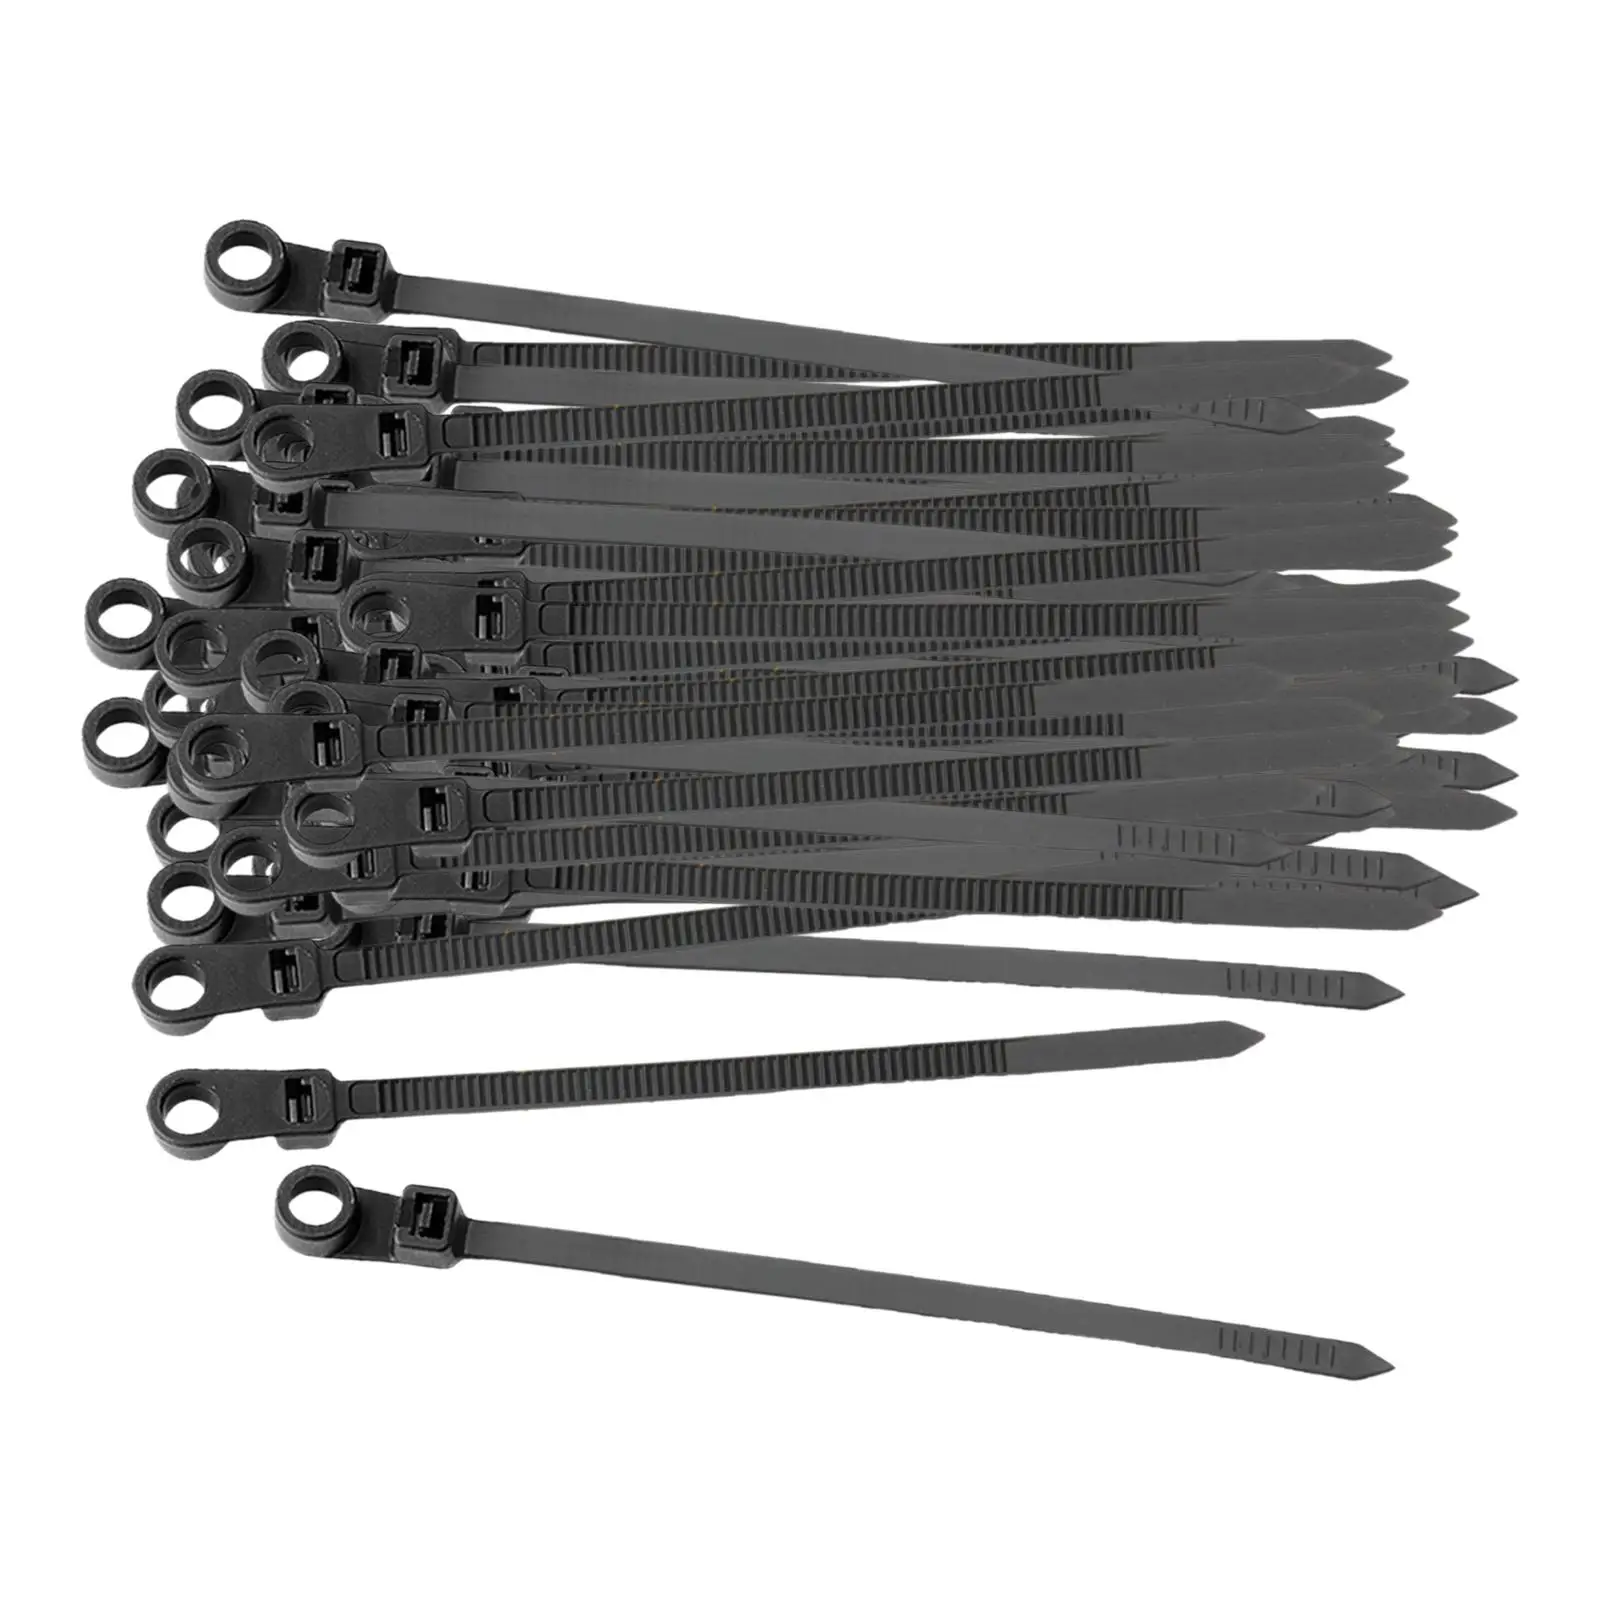 100x Nylon Cable Zips Wire Ties with Screw Hole Self Locking Tie Wraps for Home Garage Indoor Outdoor Garden Trellis Workshop